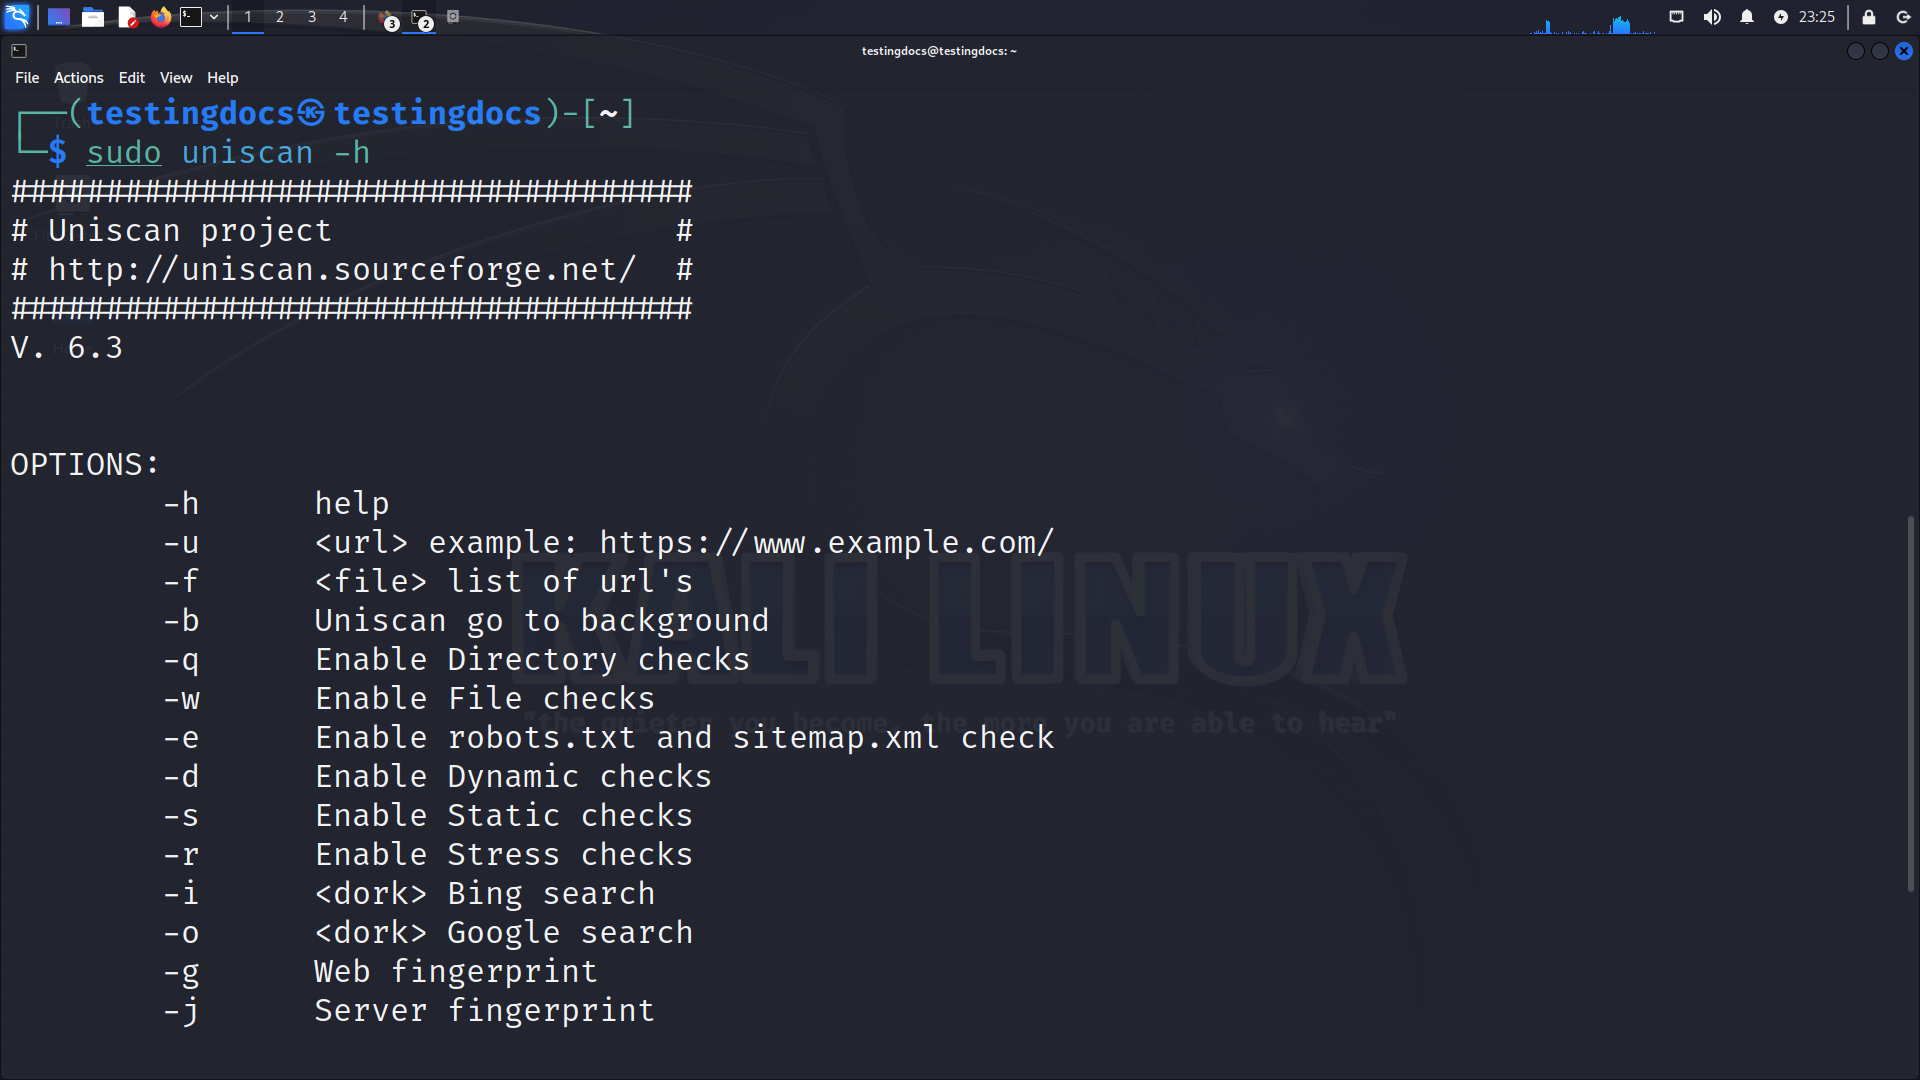 Linux Vulnerability Testing Tools